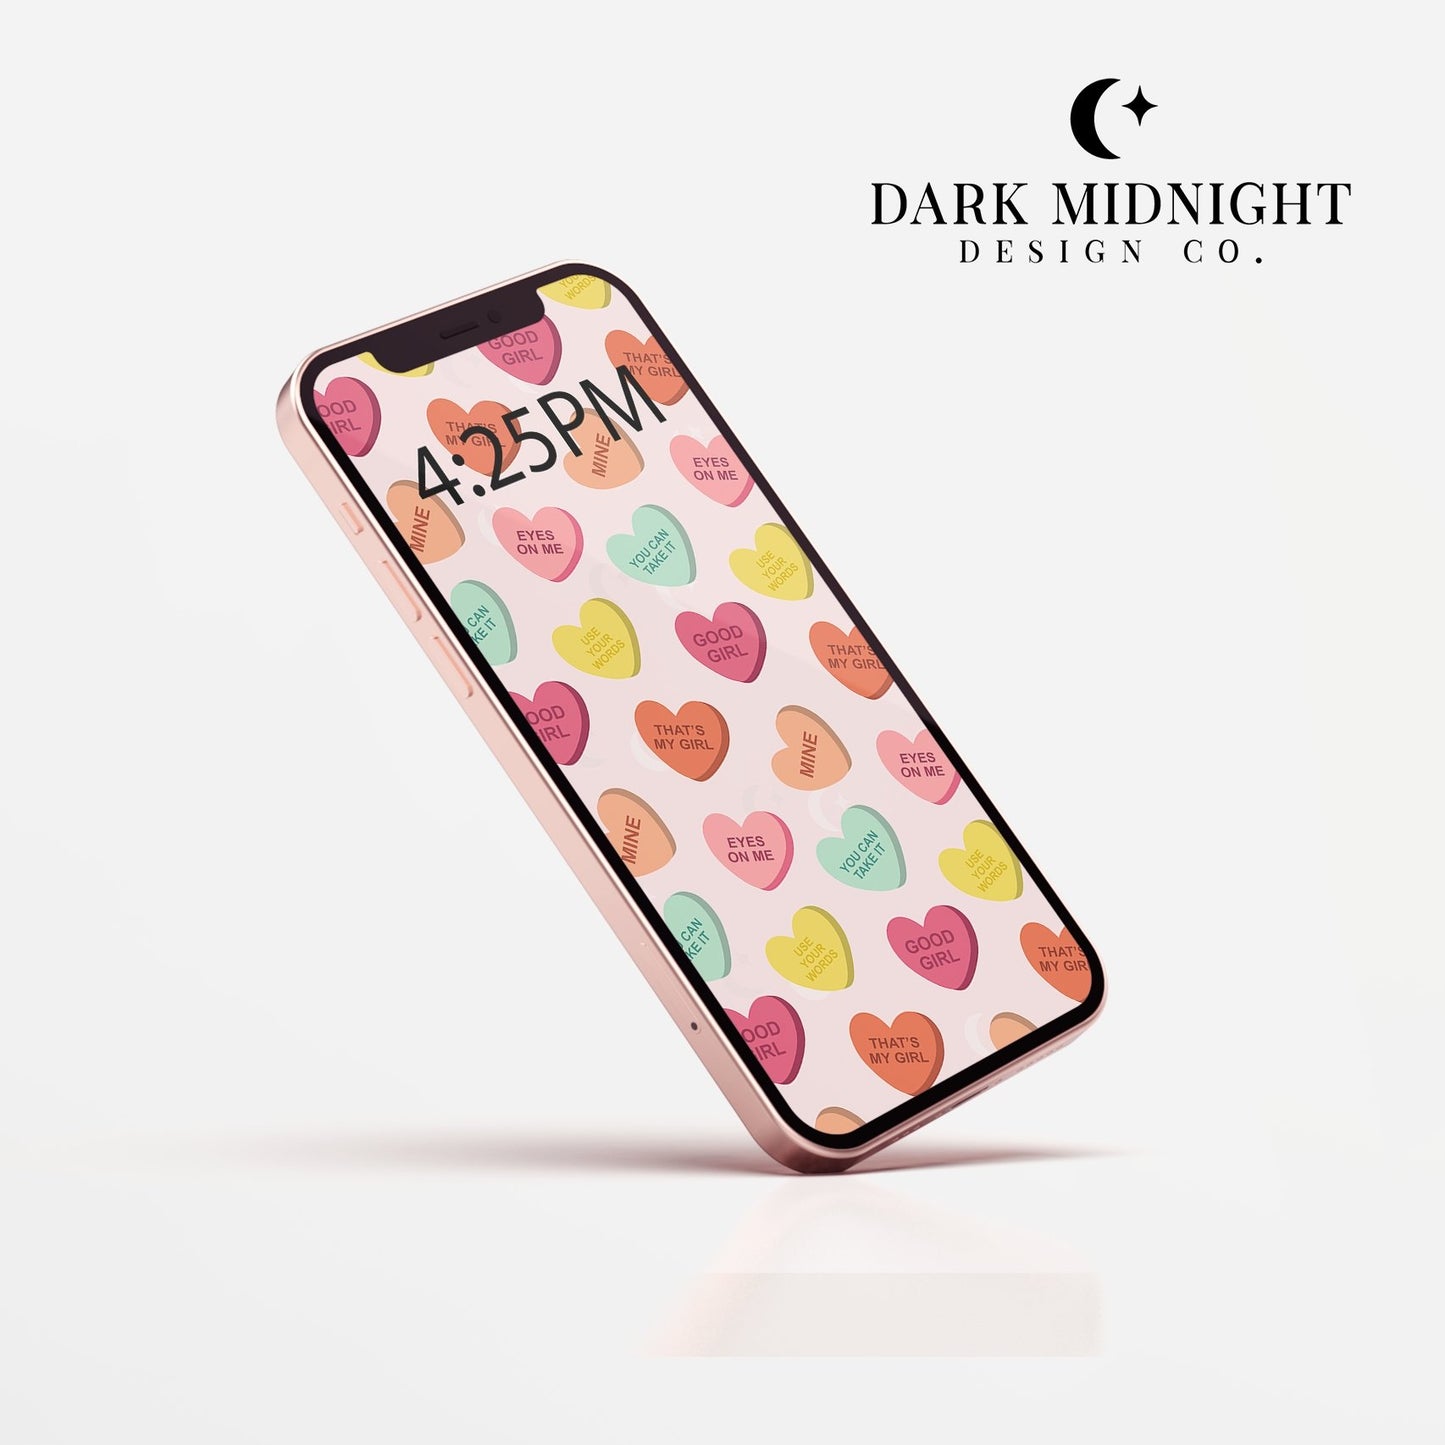 Candy Hearts Good Girl Candies Phone Wallpaper - Dark Midnight Design Co